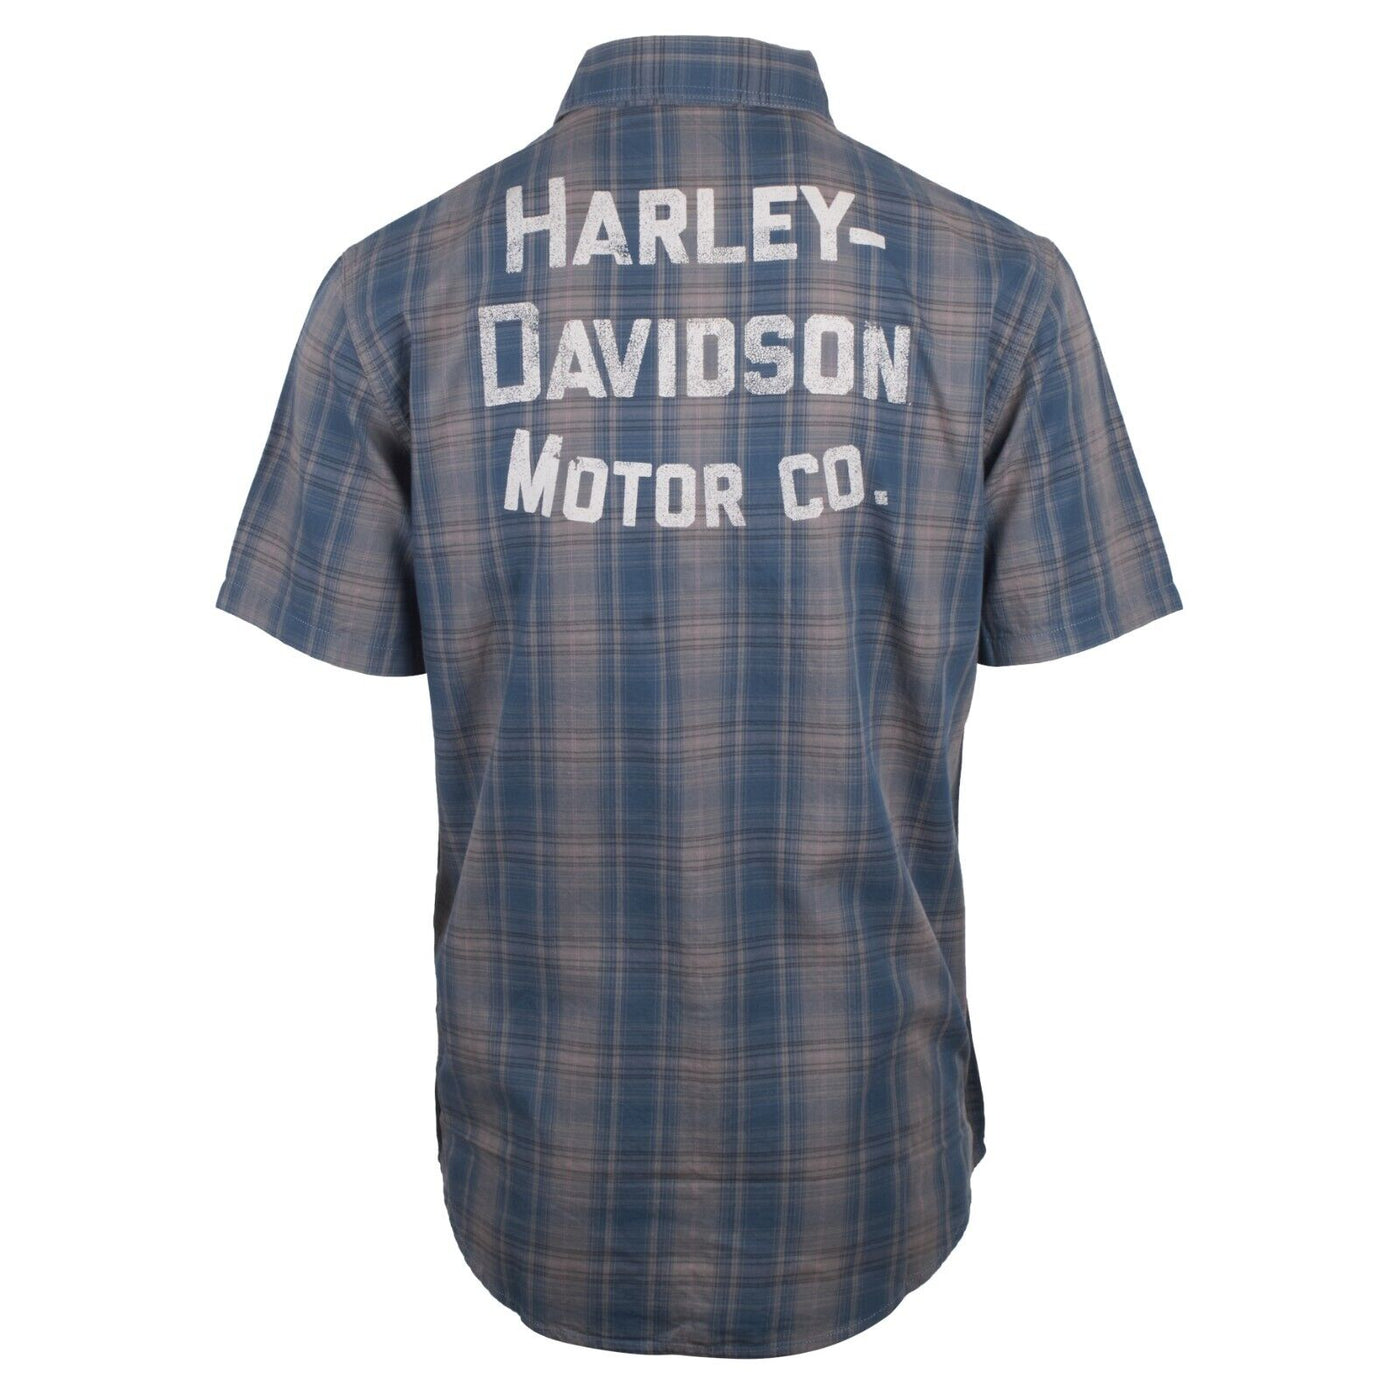 Harley-Davidson Men's Blue Grey Plaid Motor Co. Amplifier S/S Woven Shirt (S38)